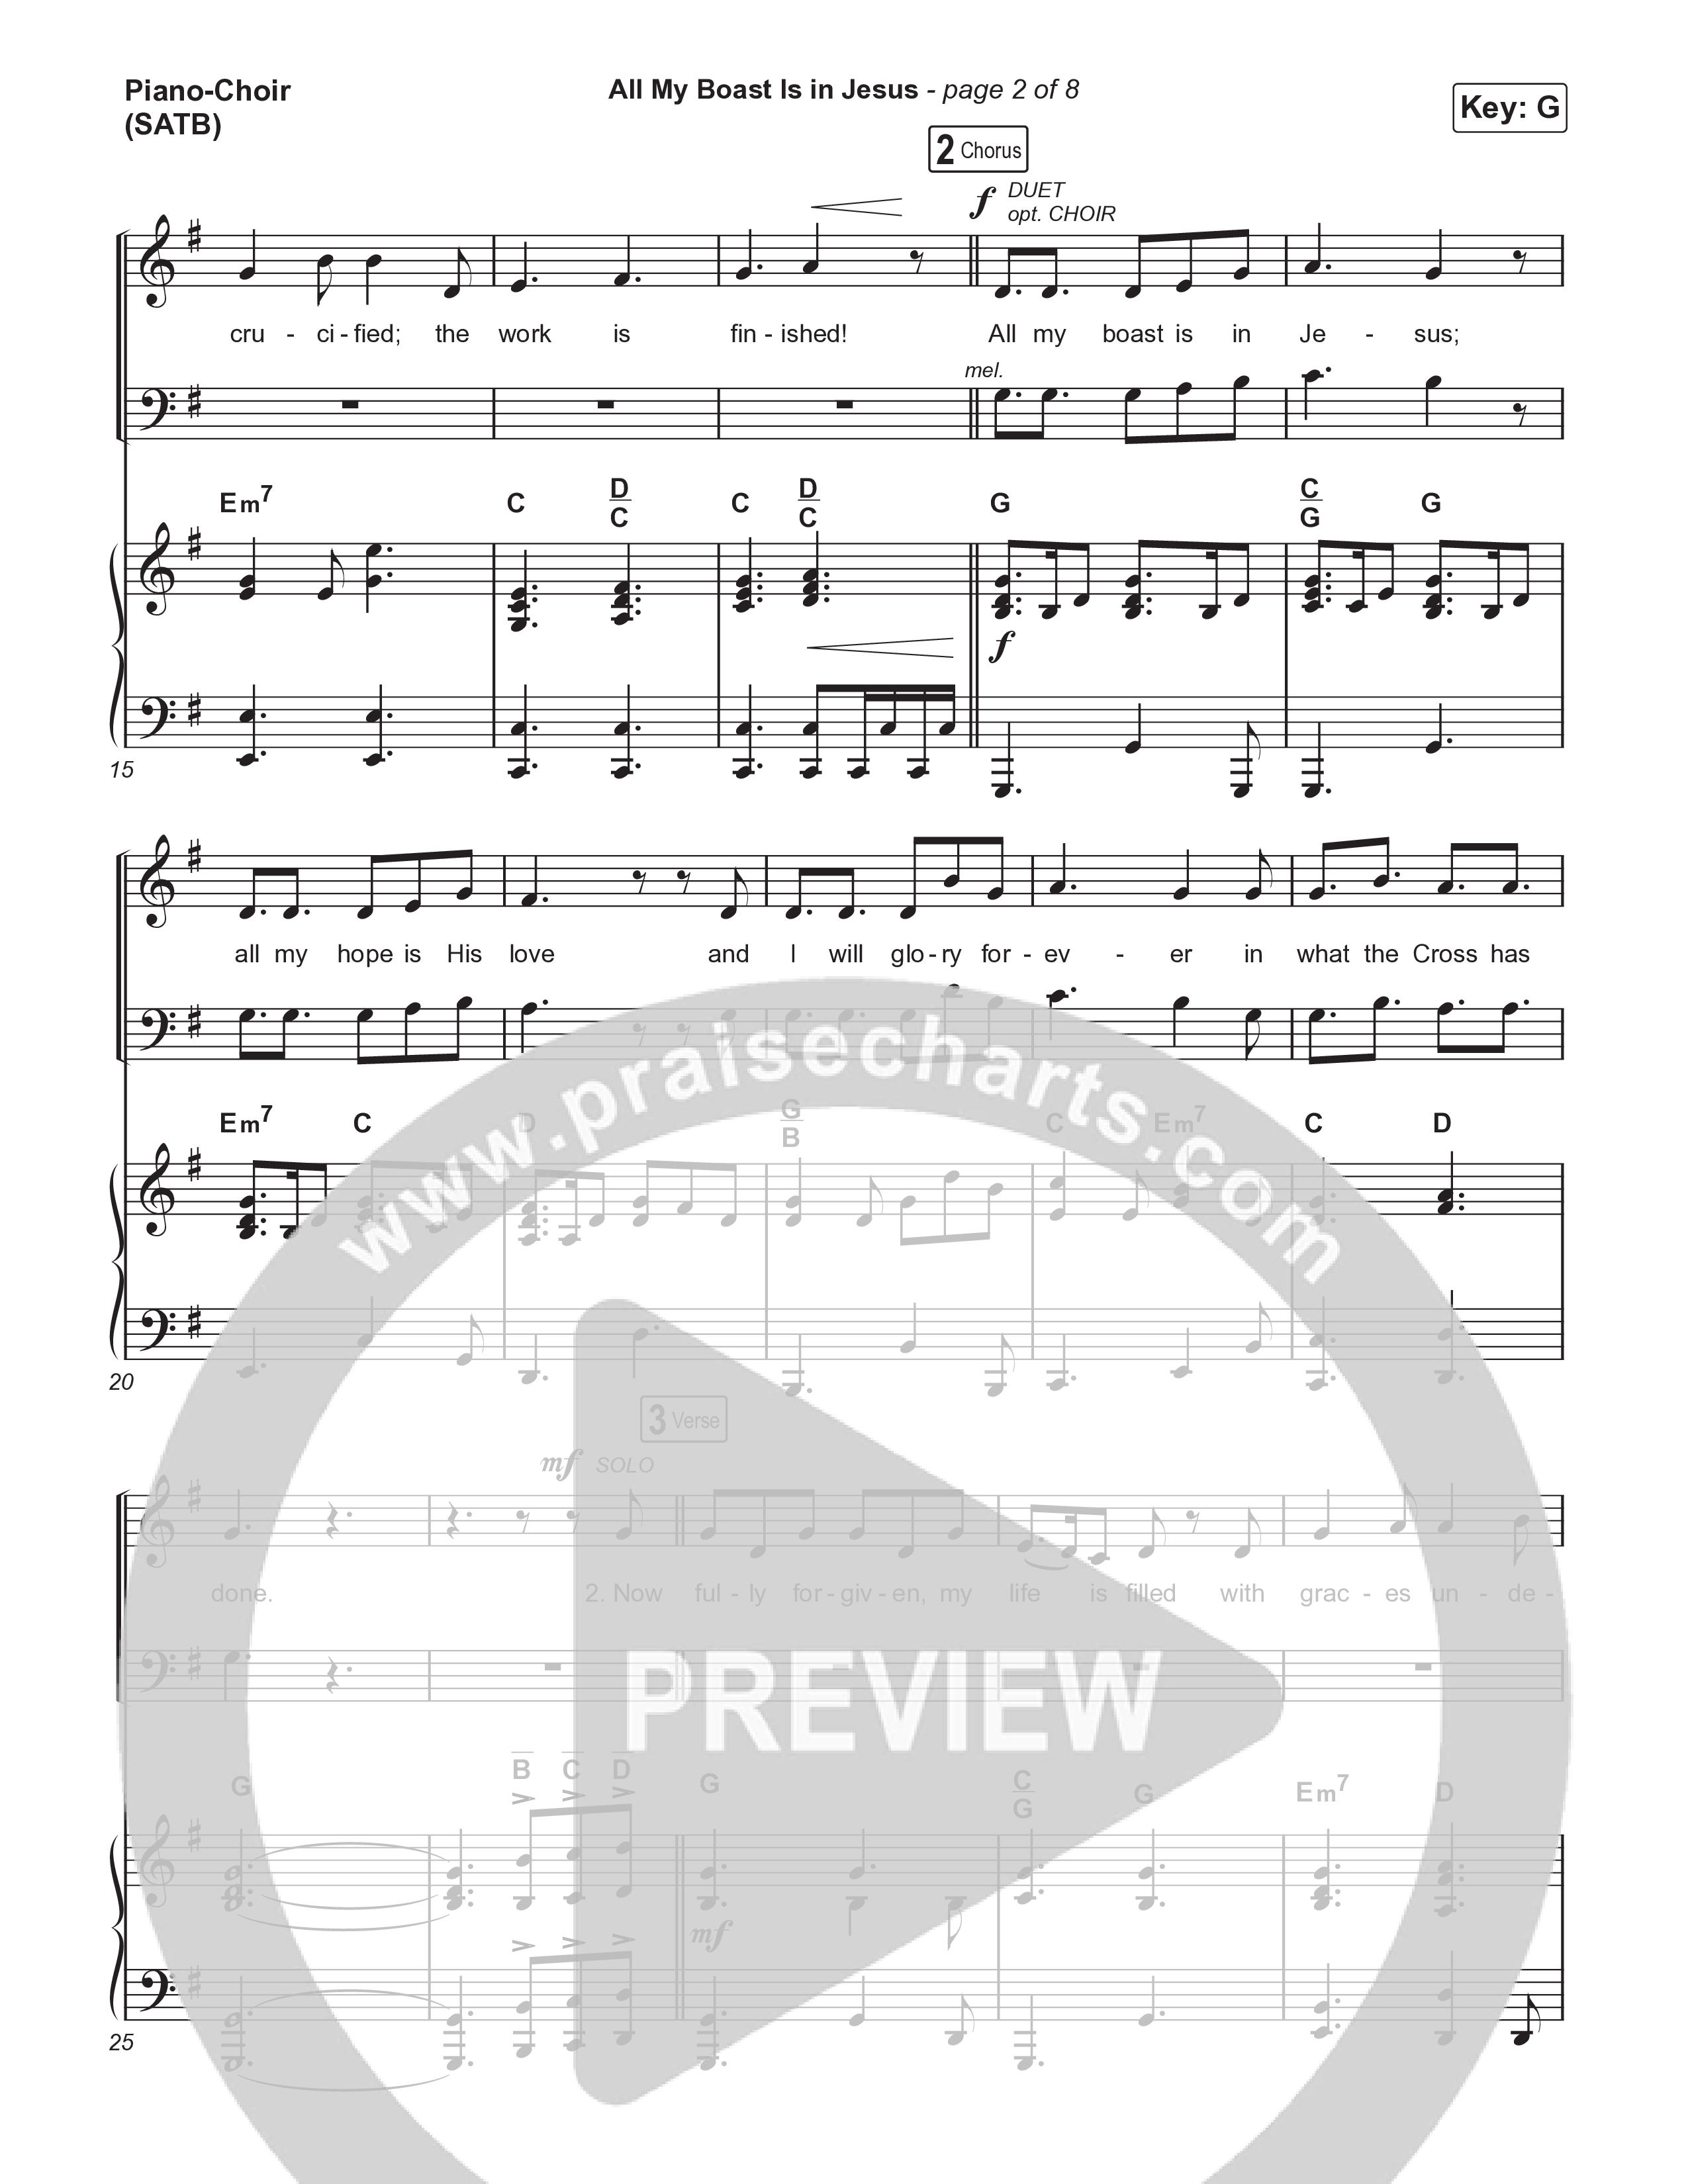 All My Boast Is In Jesus (Choral Anthem SATB) Piano/Vocal (SATB) (Matt Papa / Matt Boswell / Arr. Mason Brown / Keith & Kristyn Getty)